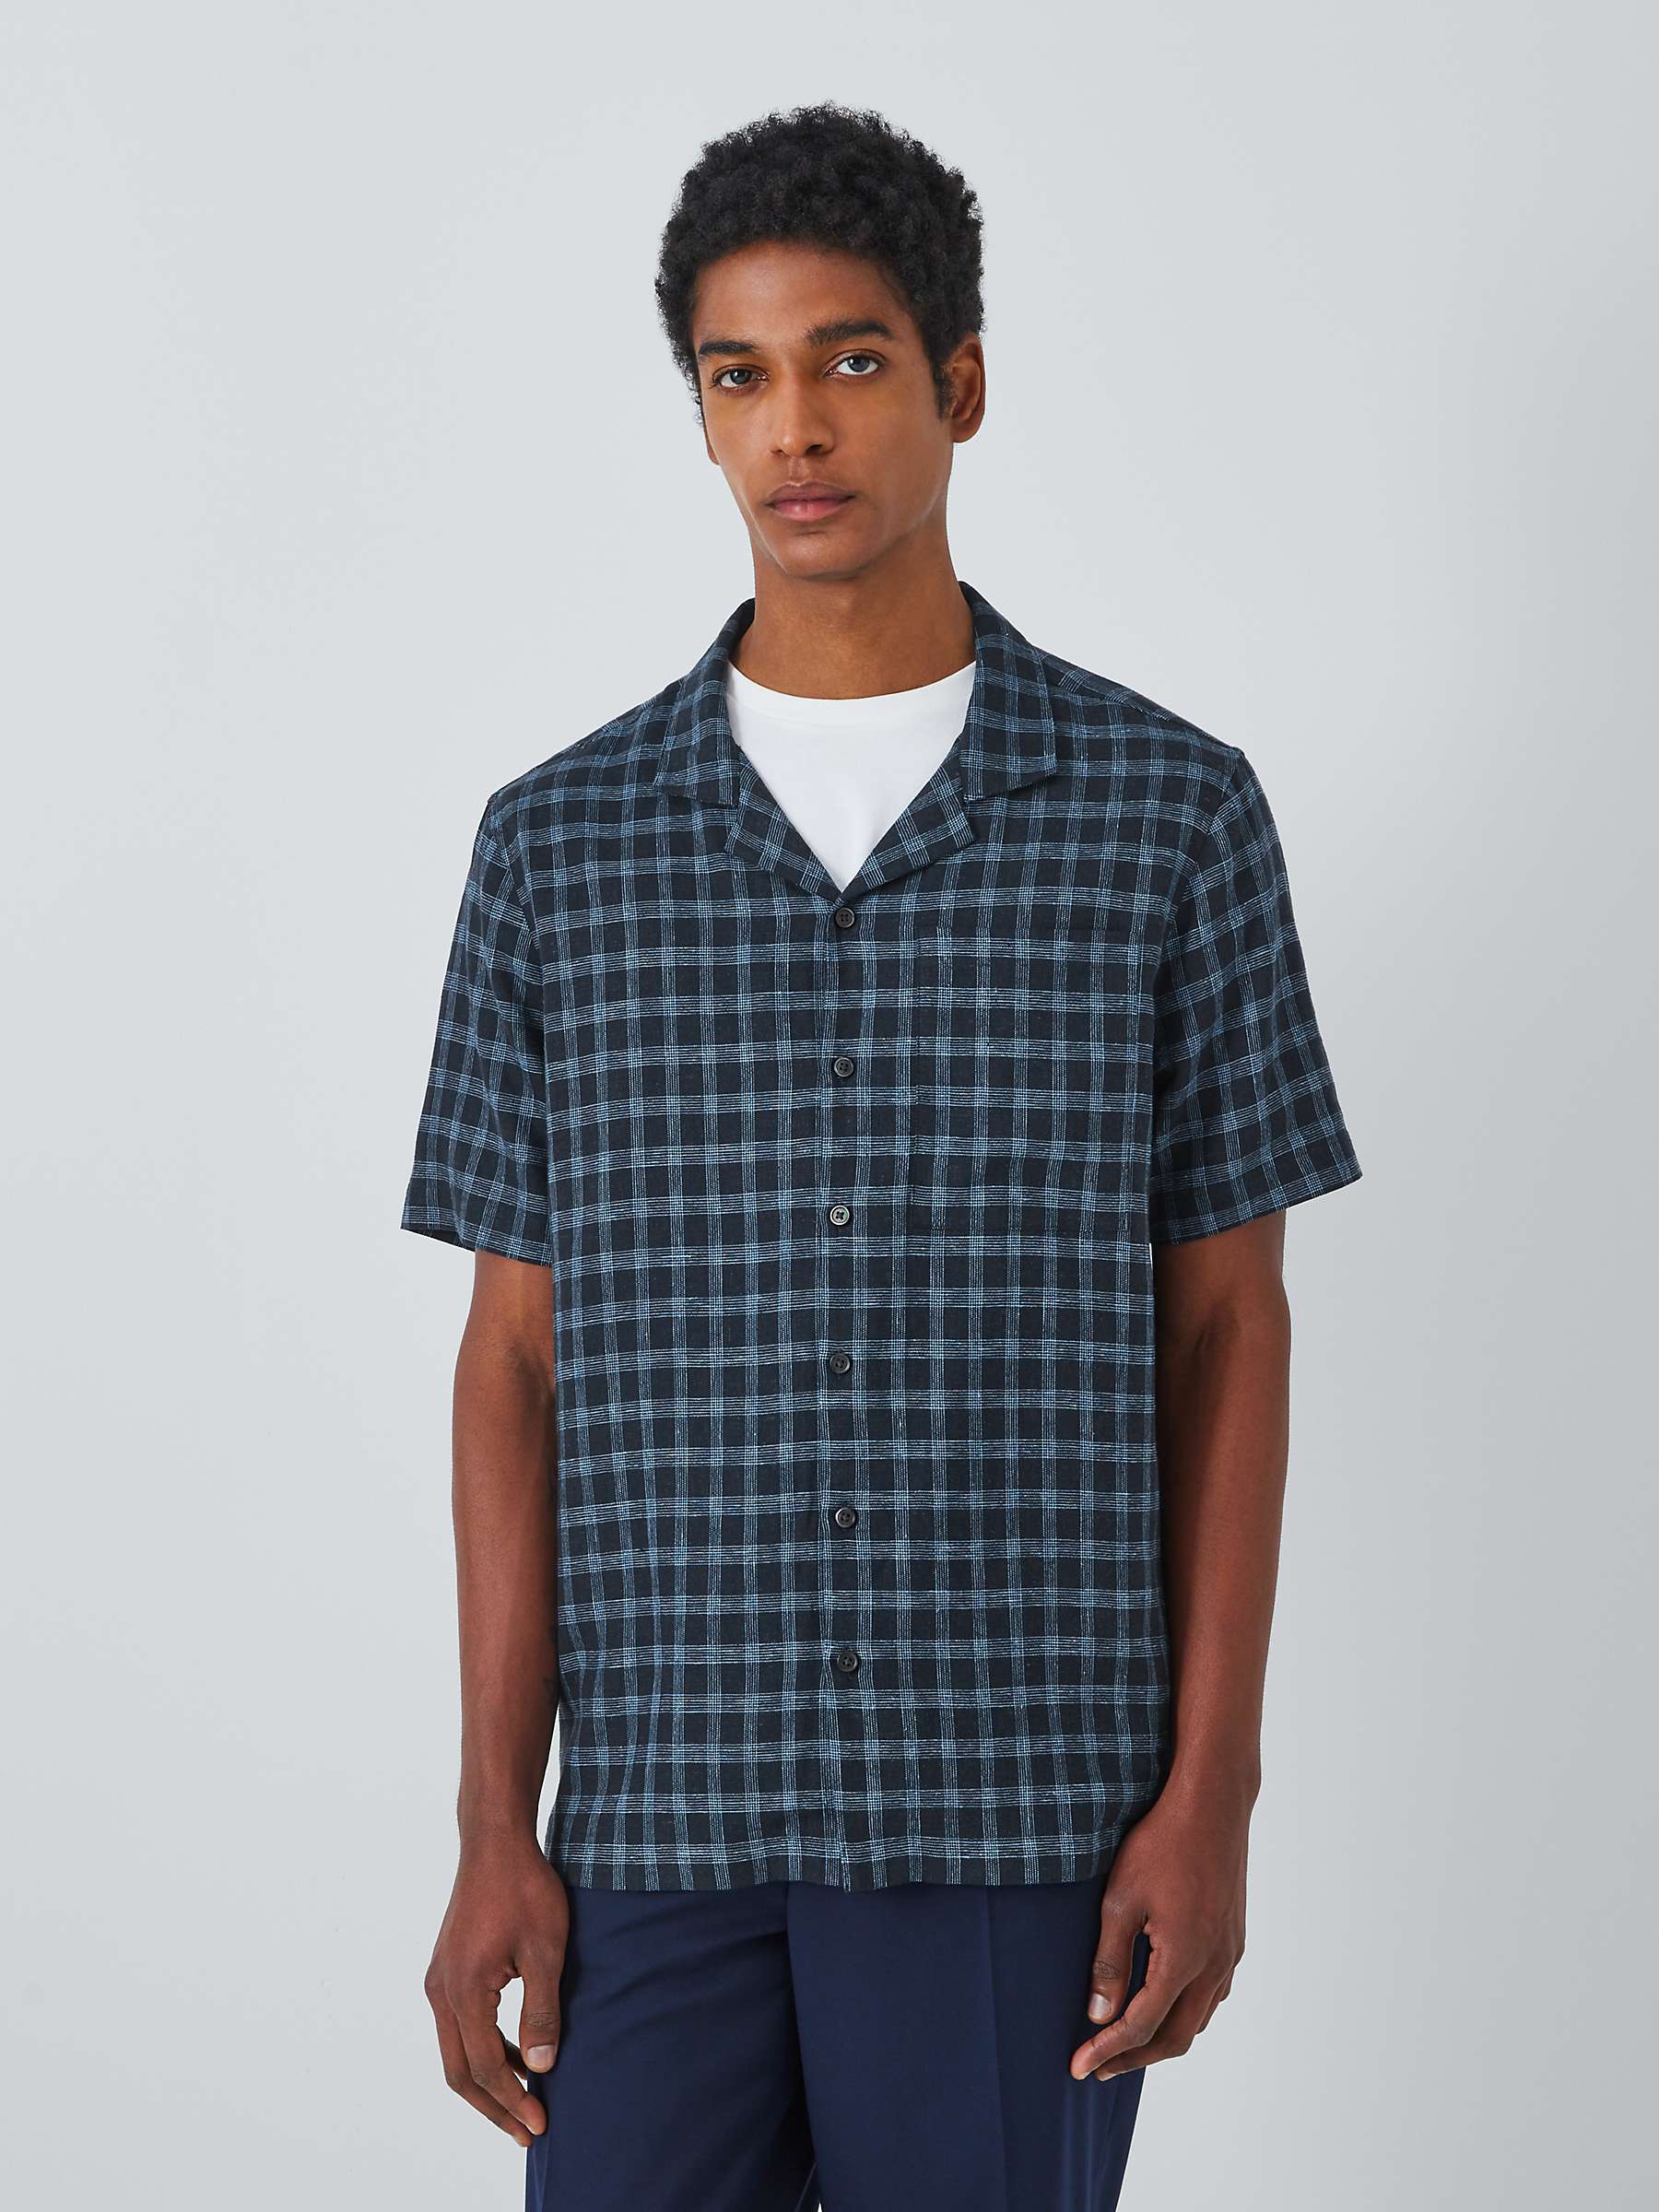 Buy Kin Linen Blend Short Sleeve Check Revere Collar Shirt, Navy Online at johnlewis.com